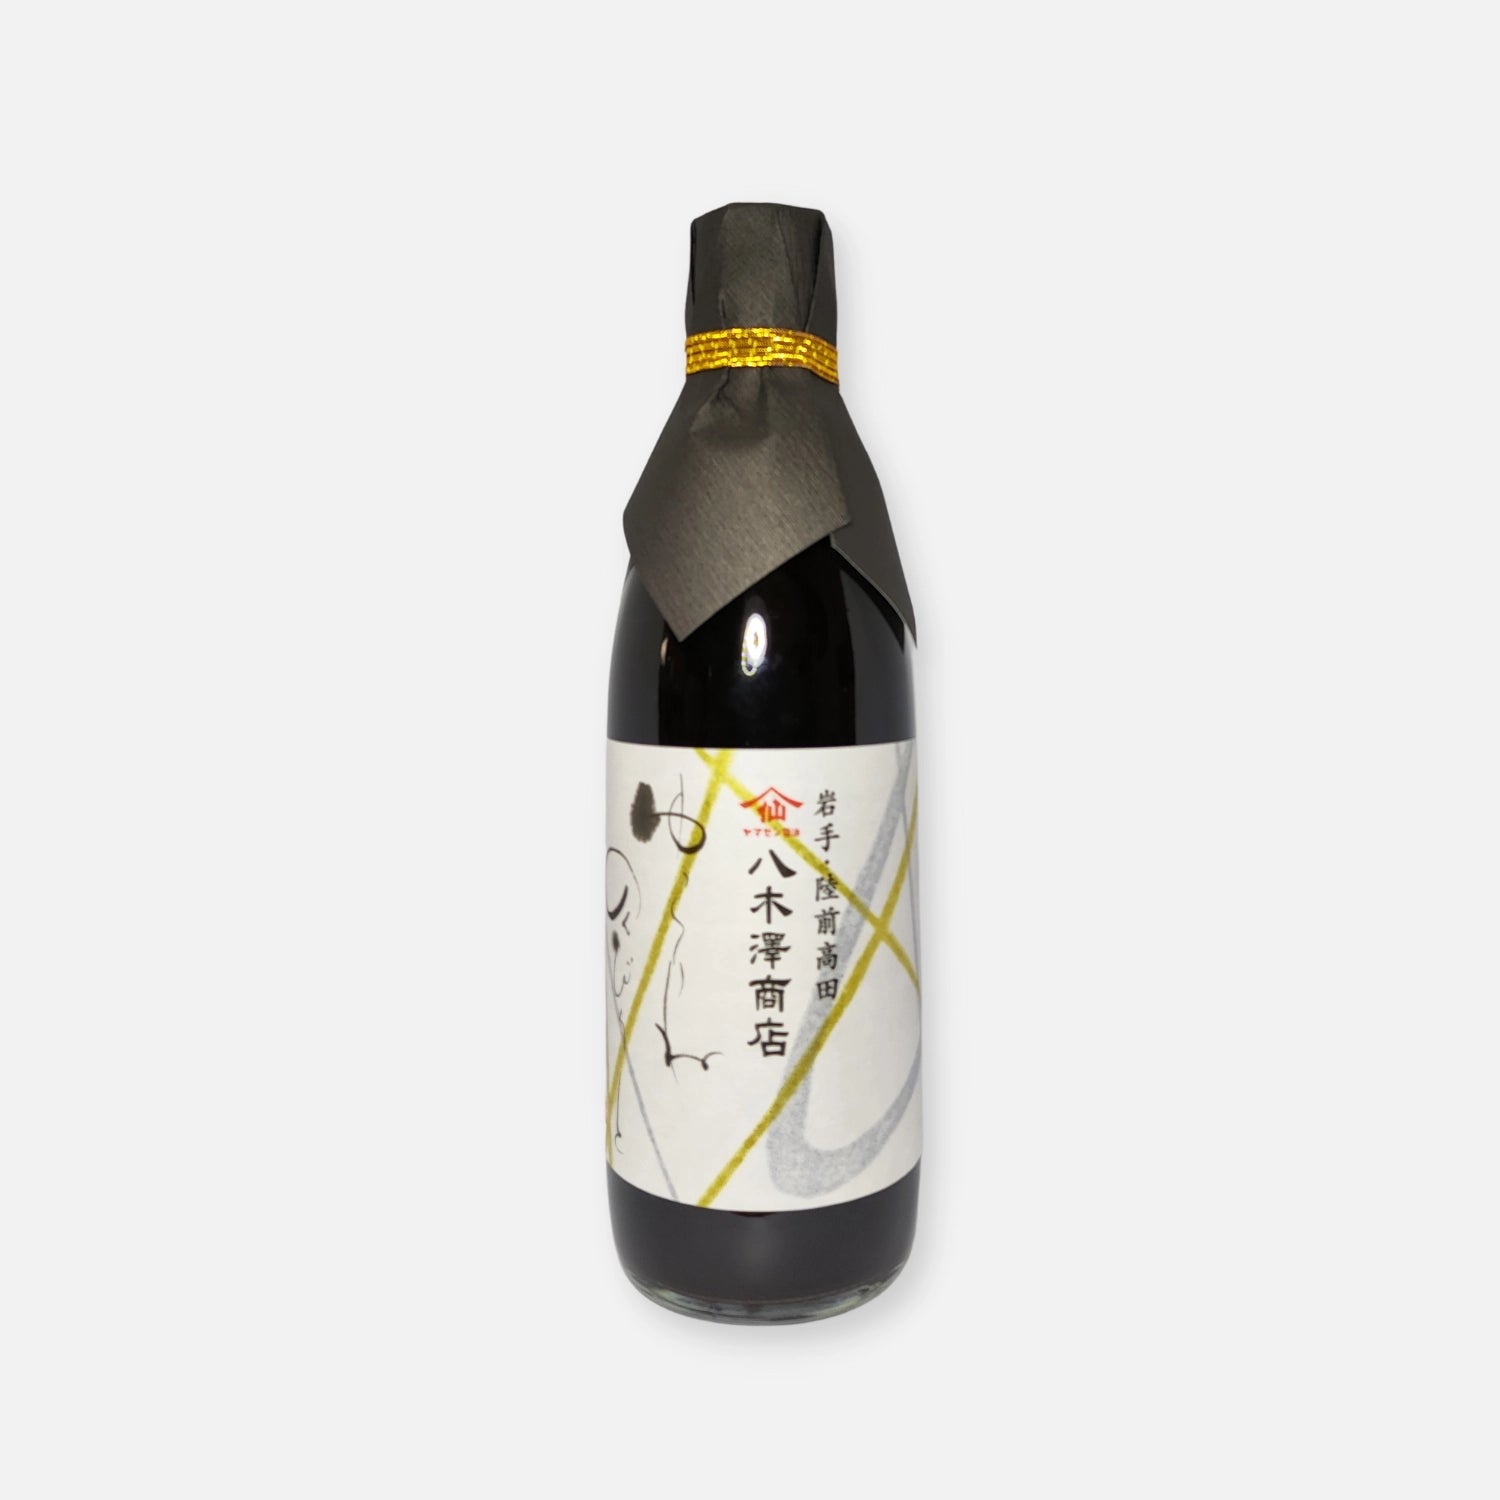 Yamasen Shoyu Whole Bean Soy Sauce Glass Bottle 360ml - Buy Me Japan